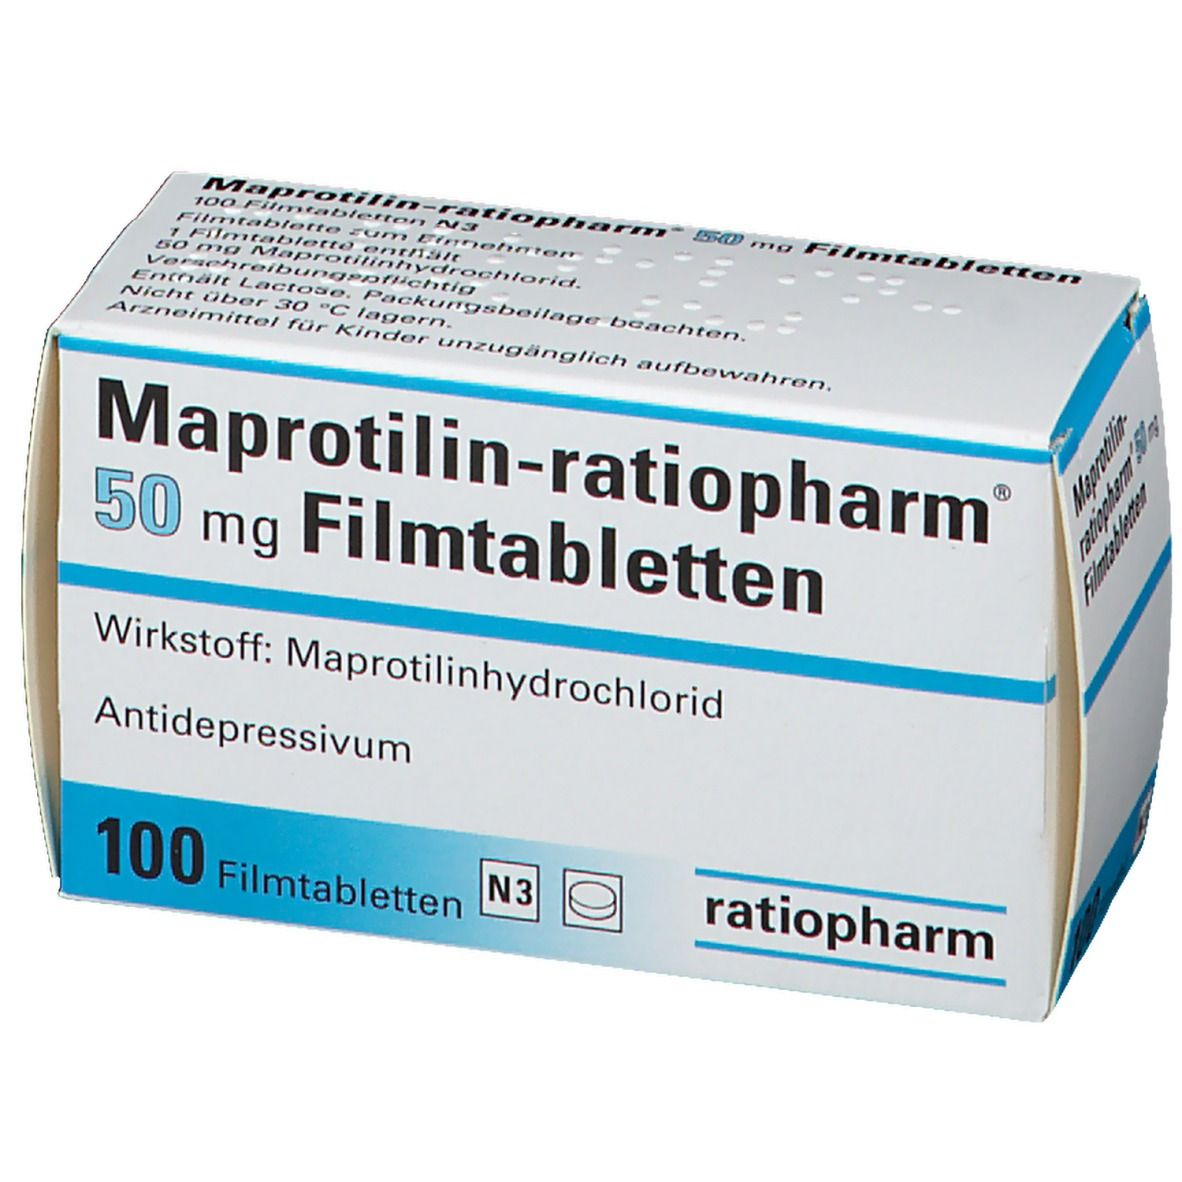 Maprotilin-ratiopharm® 50 mg